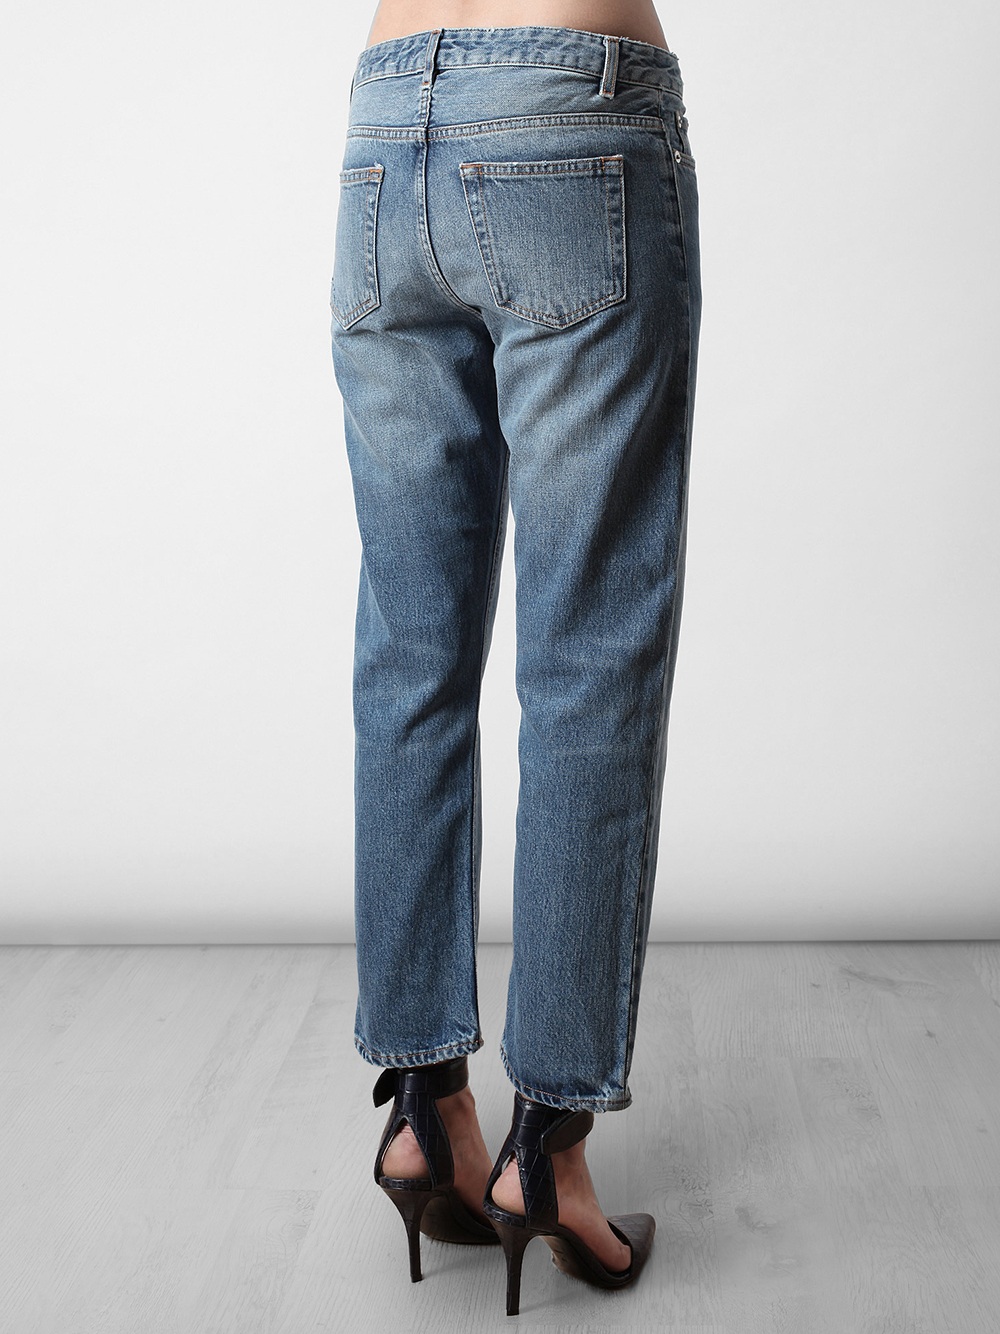 Acne Studios Pop Betty Classic Denim Jeans in Blue - Lyst